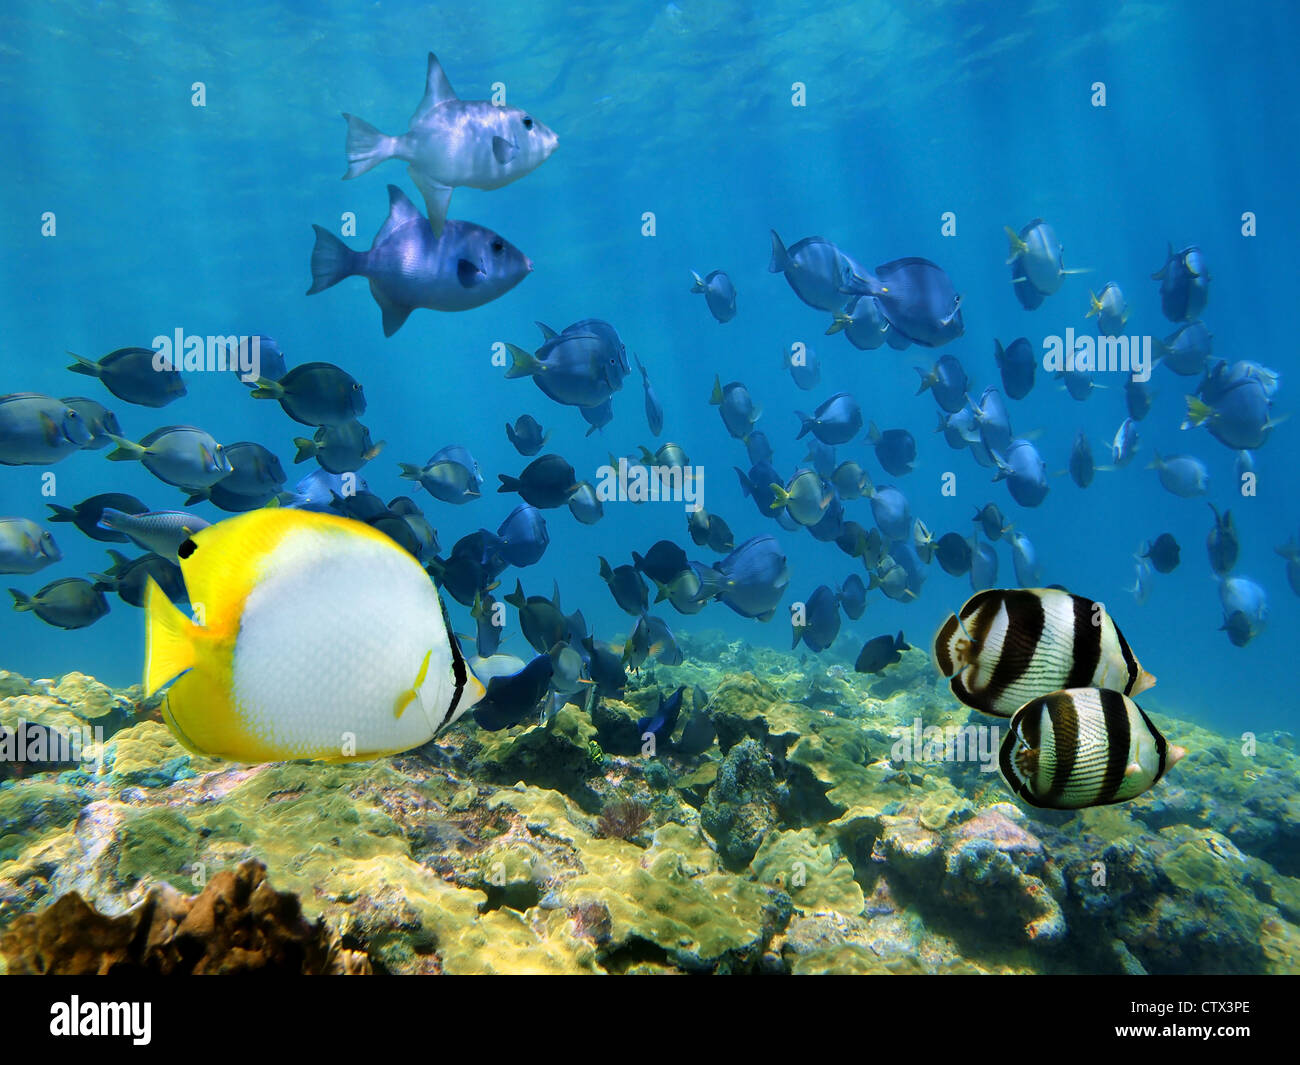 School of tropical fish underwater in the Caribbean sea, Costa Rica Stock Photo